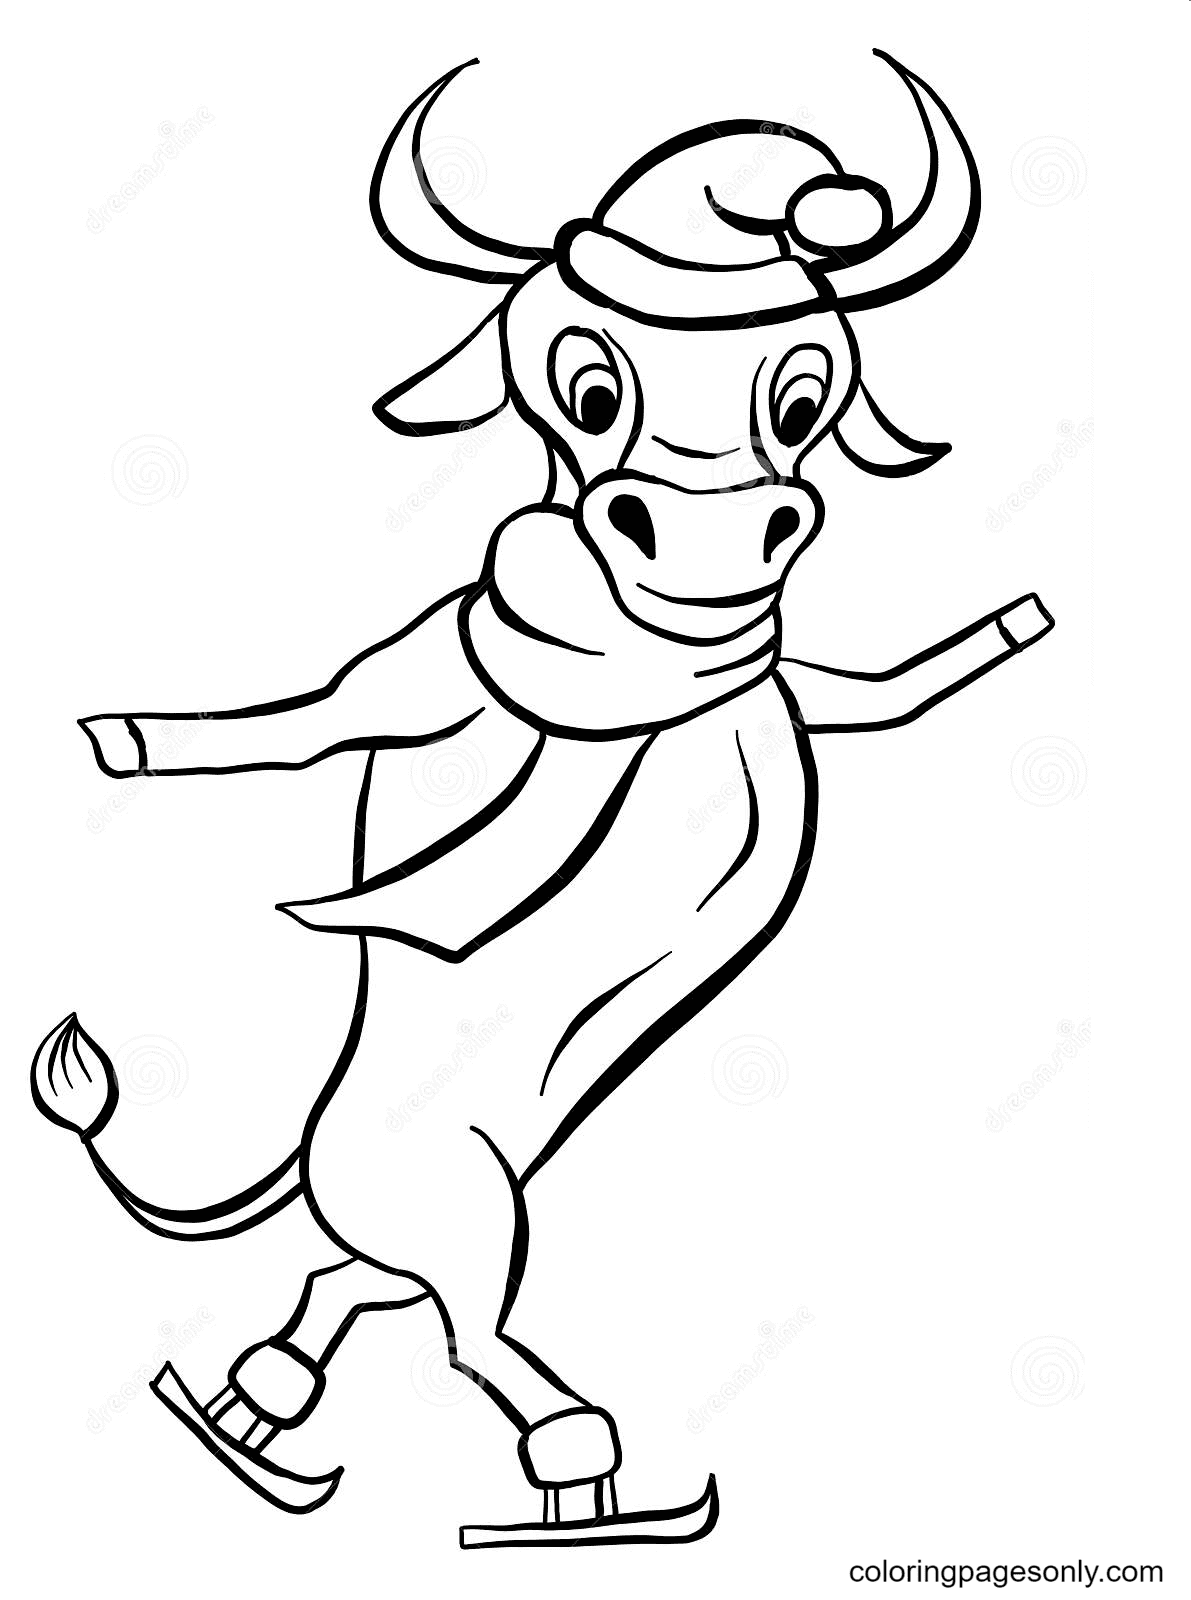 Skating Cow Coloring Page